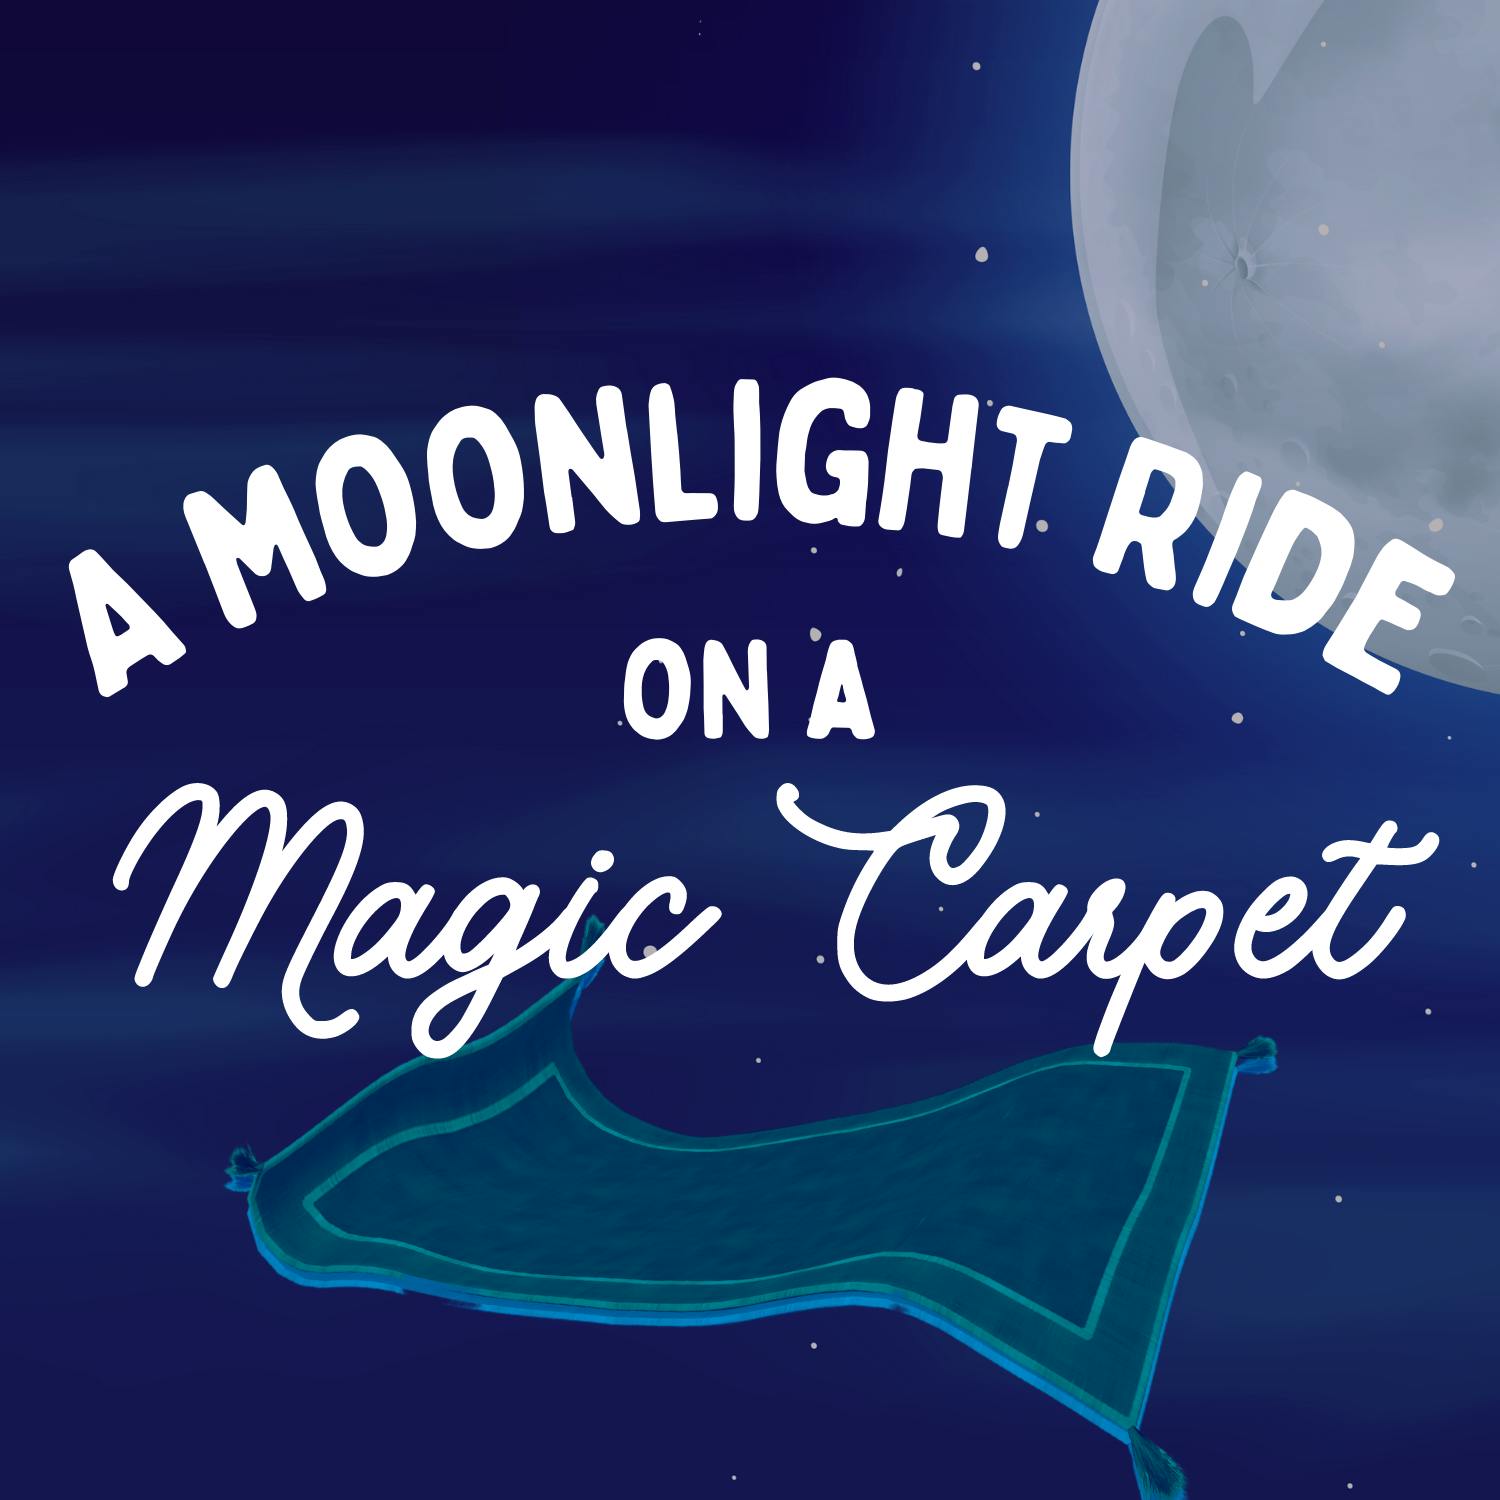 A Moonlight Ride on a Magic Carpet